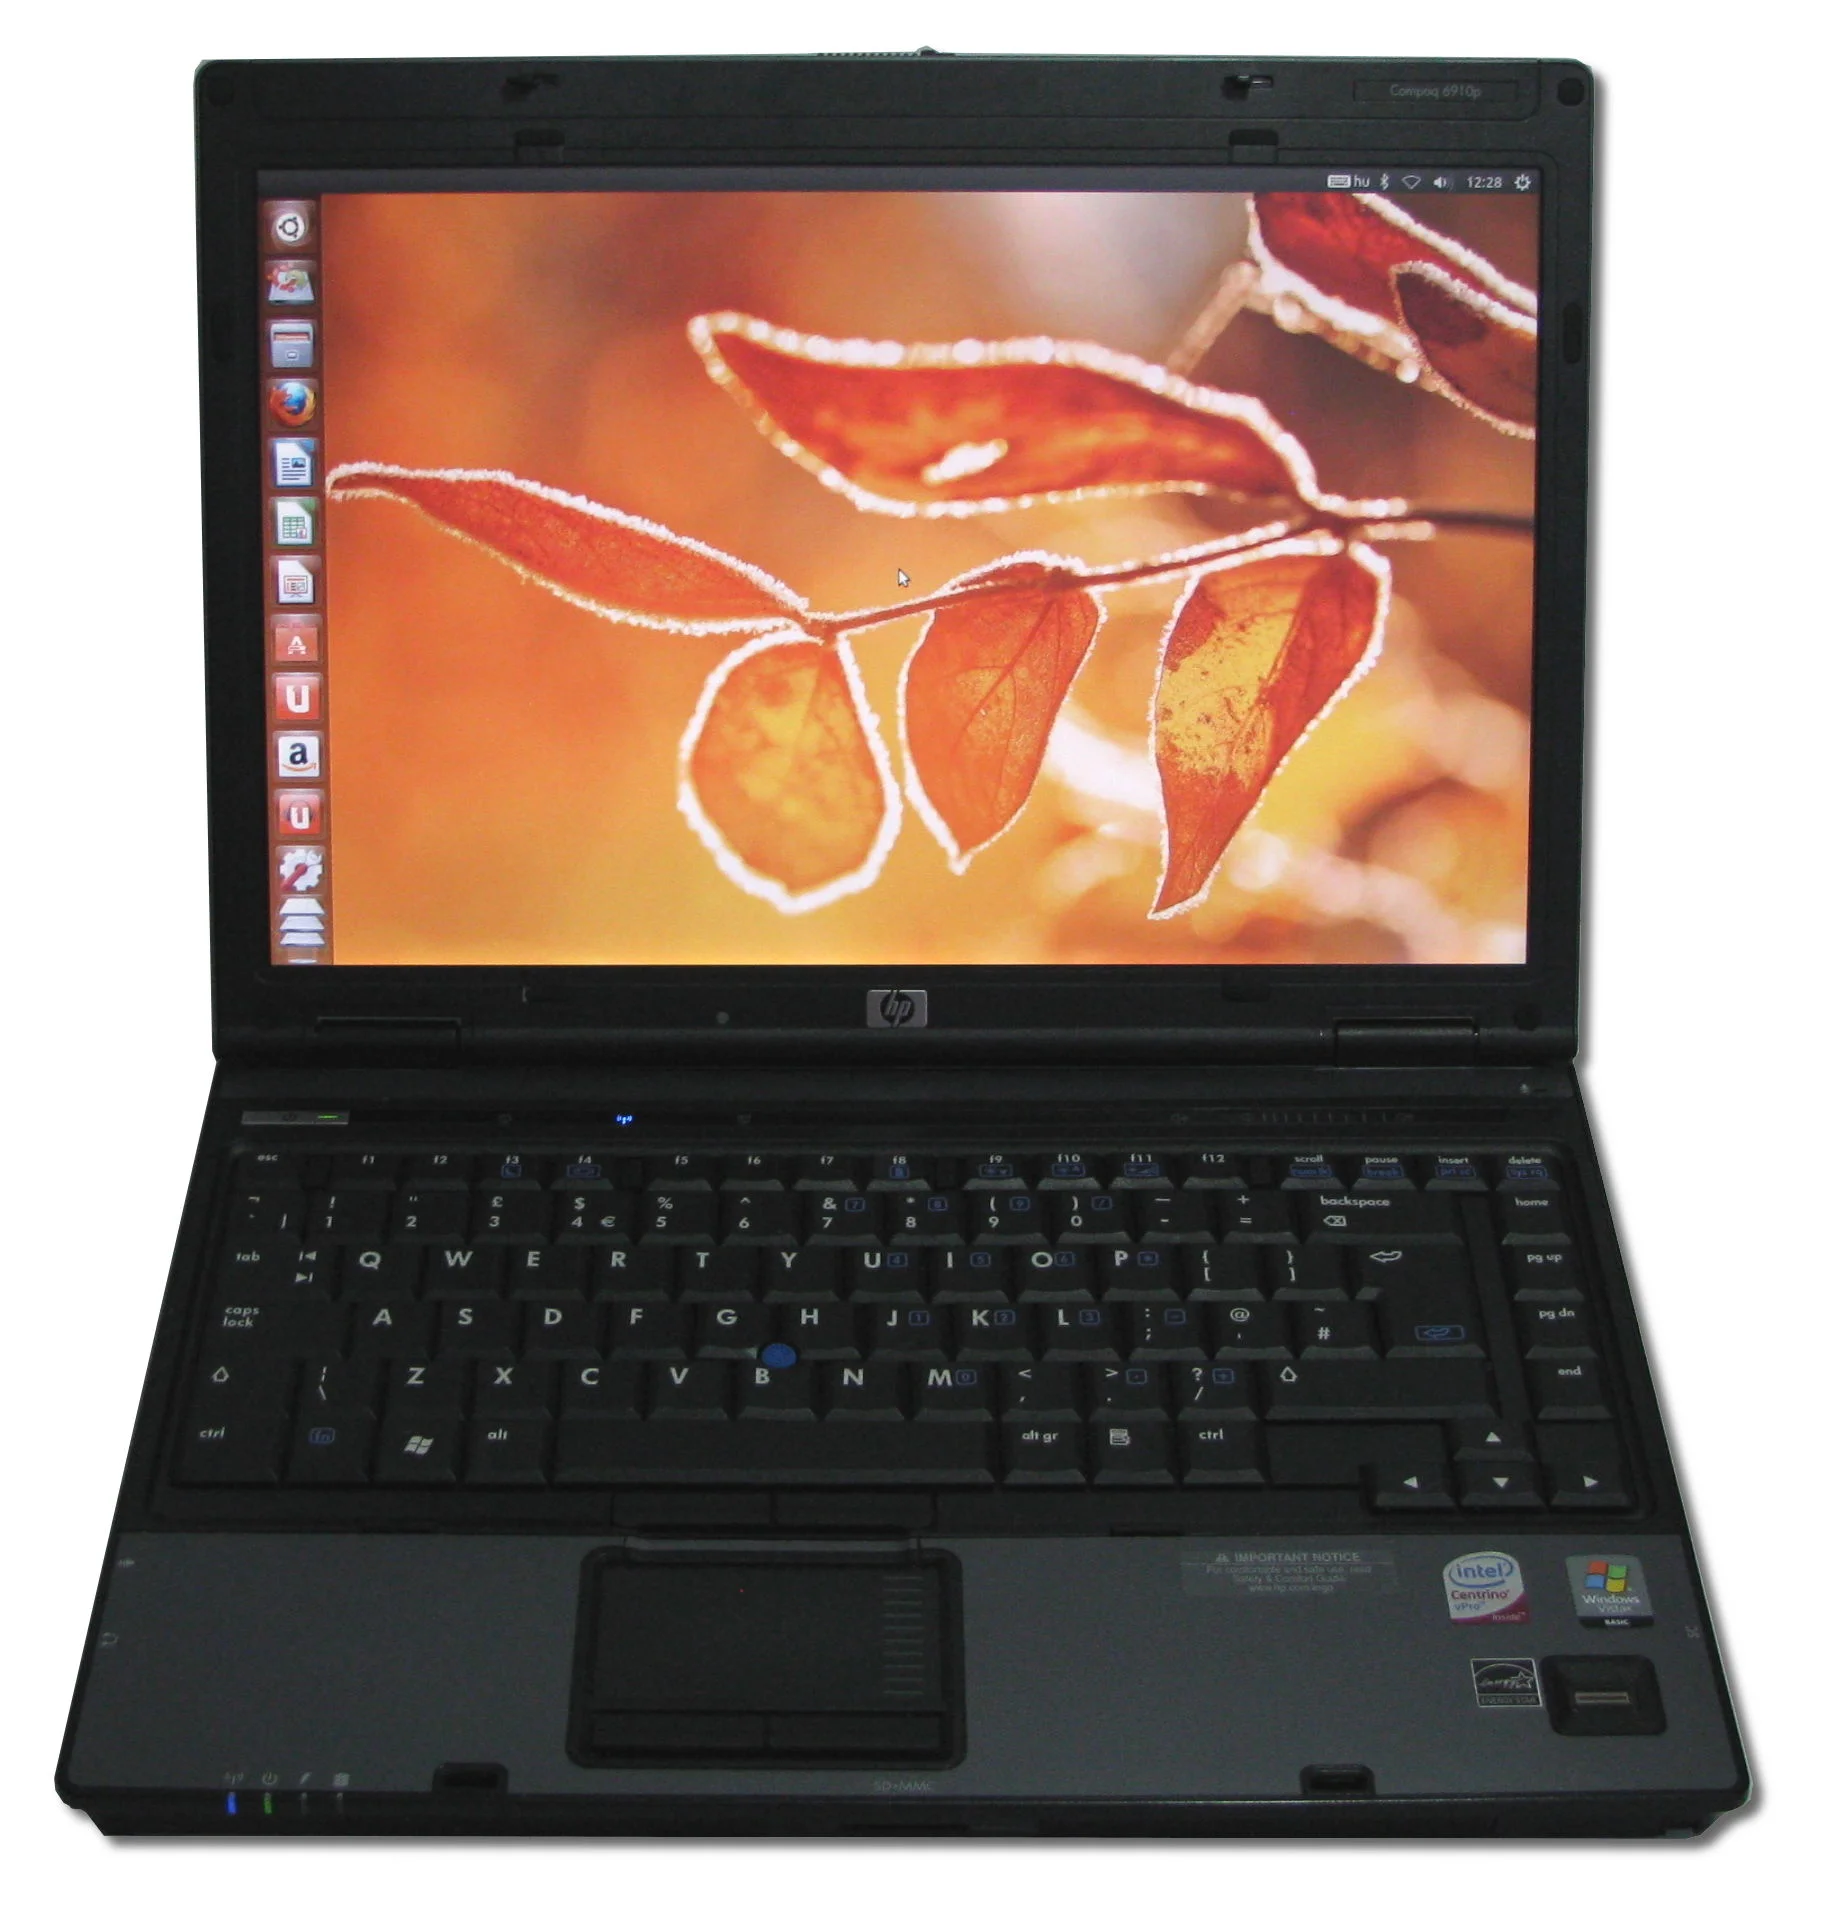 HP Compaq 6910p  használt laptop - INTEL CORE 2 T7300 2,0 GHZ, 3 GB RAM, 160 GB HDD, 14,1